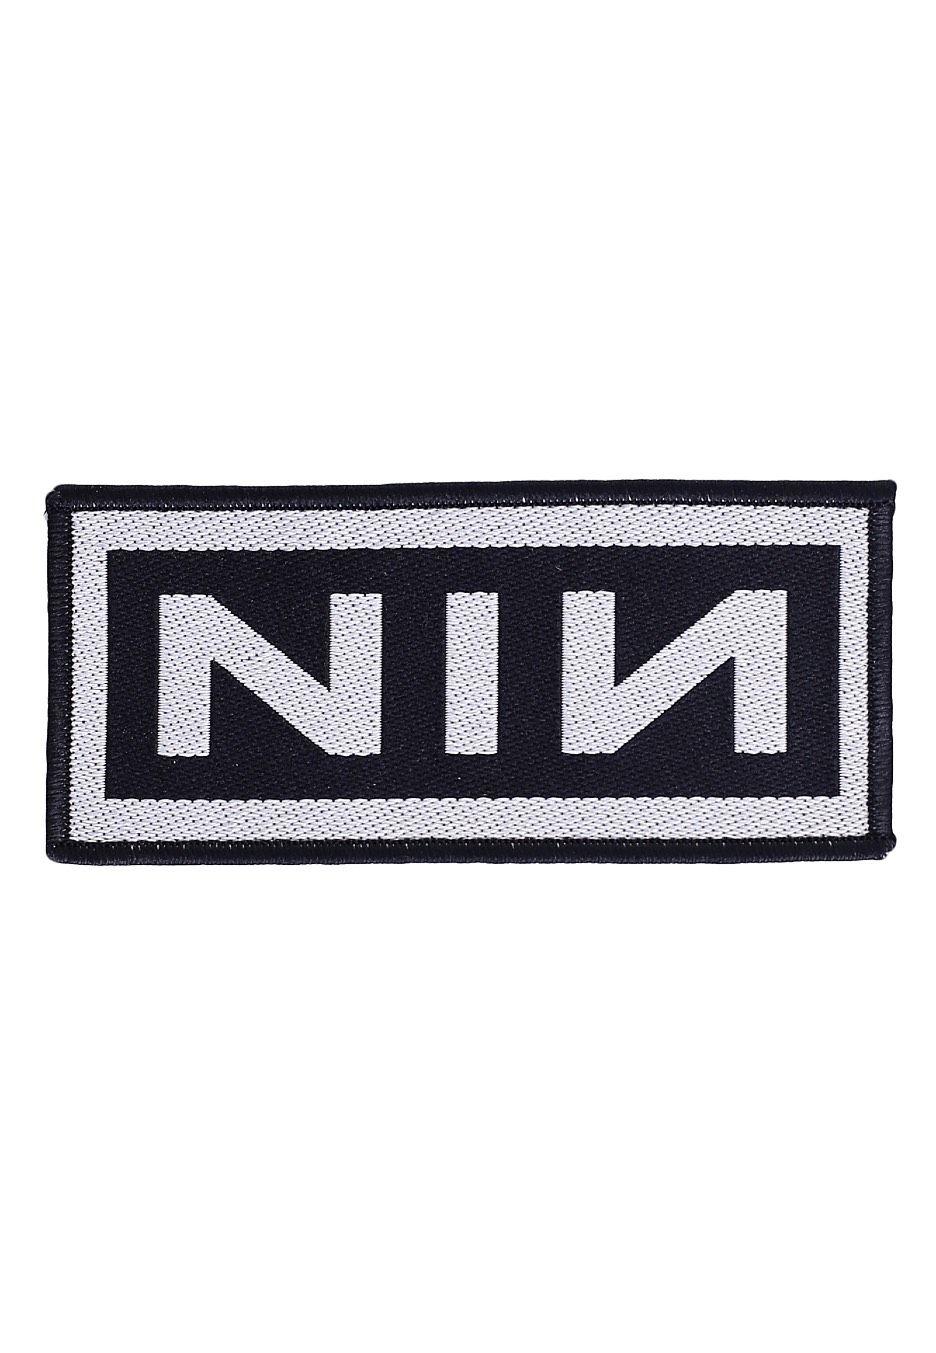 Nine Inch Nails Logo - Nine Inch Nails Pop Merchandise Shop